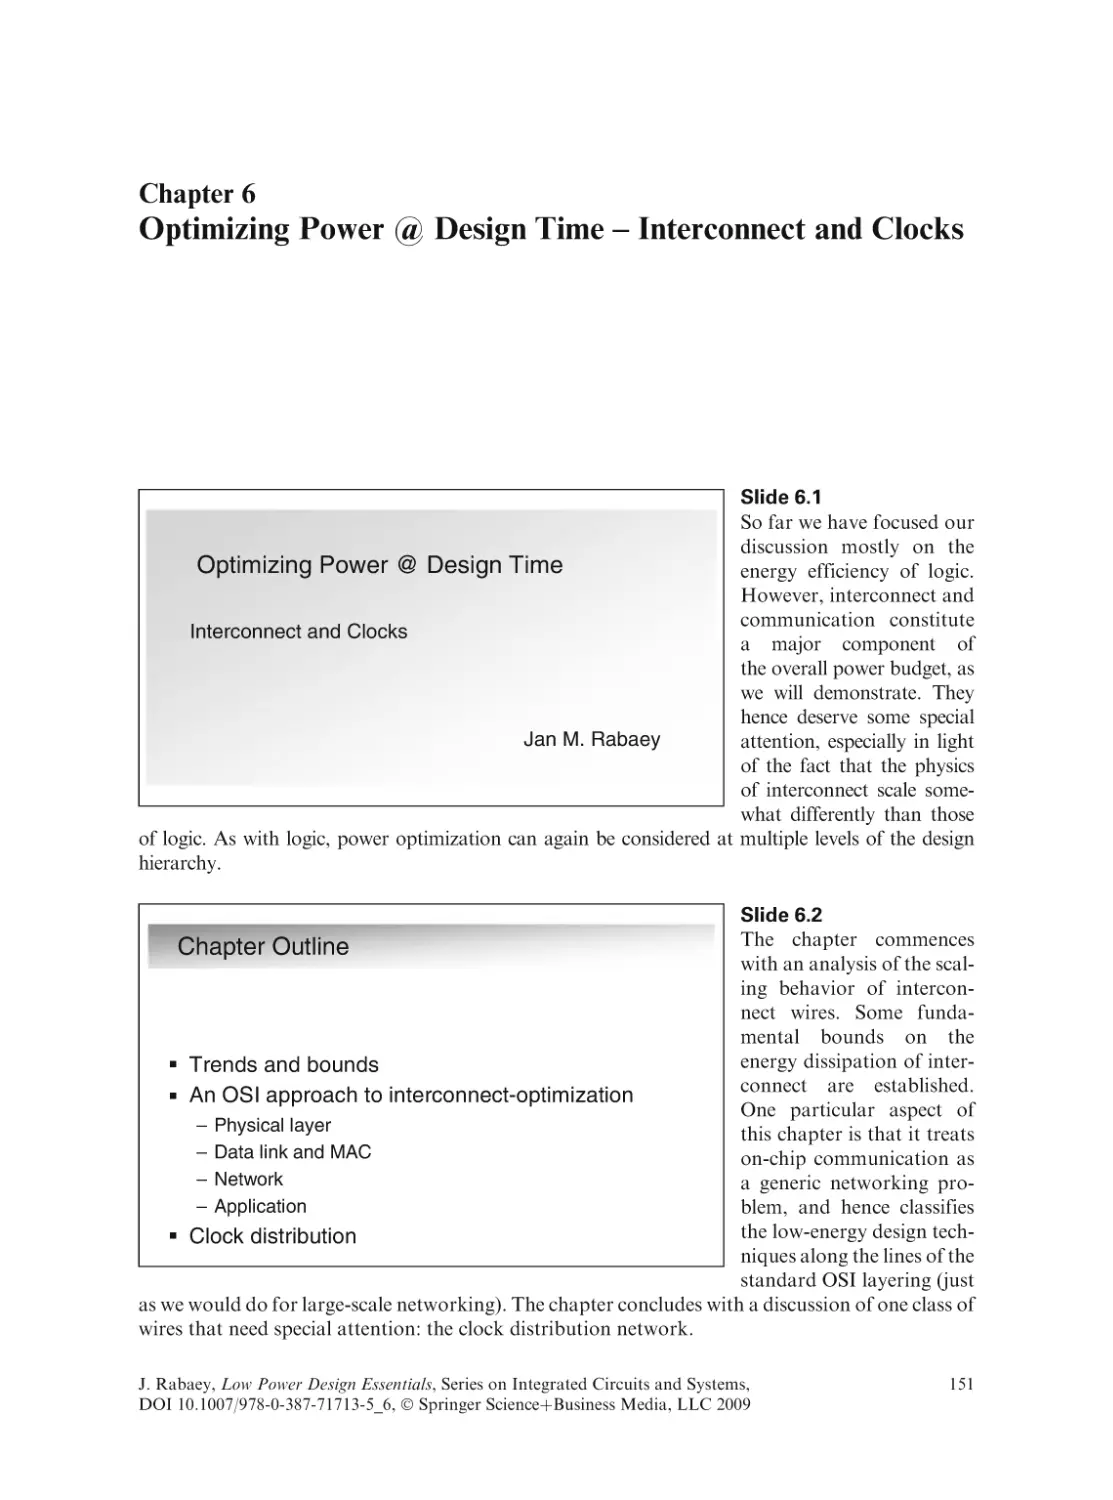 Optimizing Power @ Design Time - Interconnect and Clocks
Slide 6.1
Slide 6.2